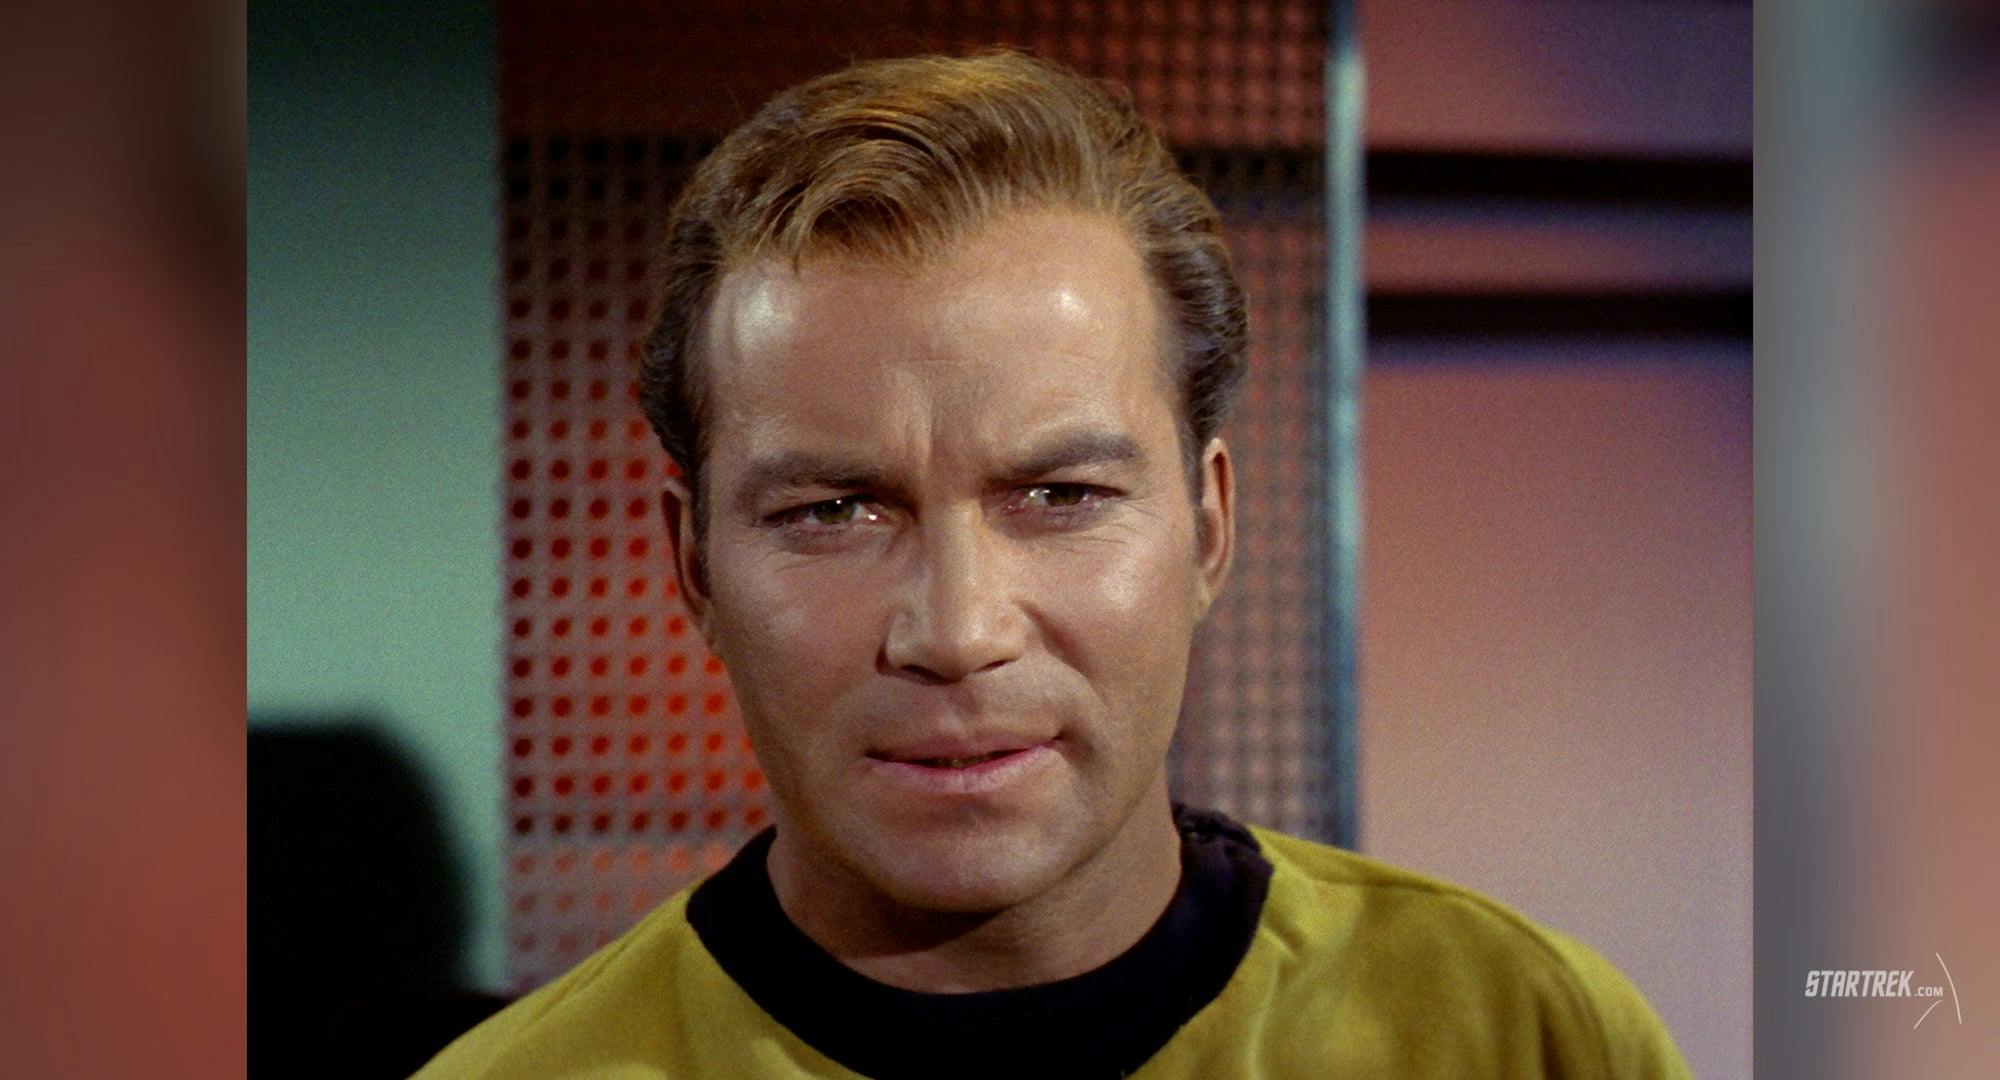 Captain Kirk' hoping he's beamed back up